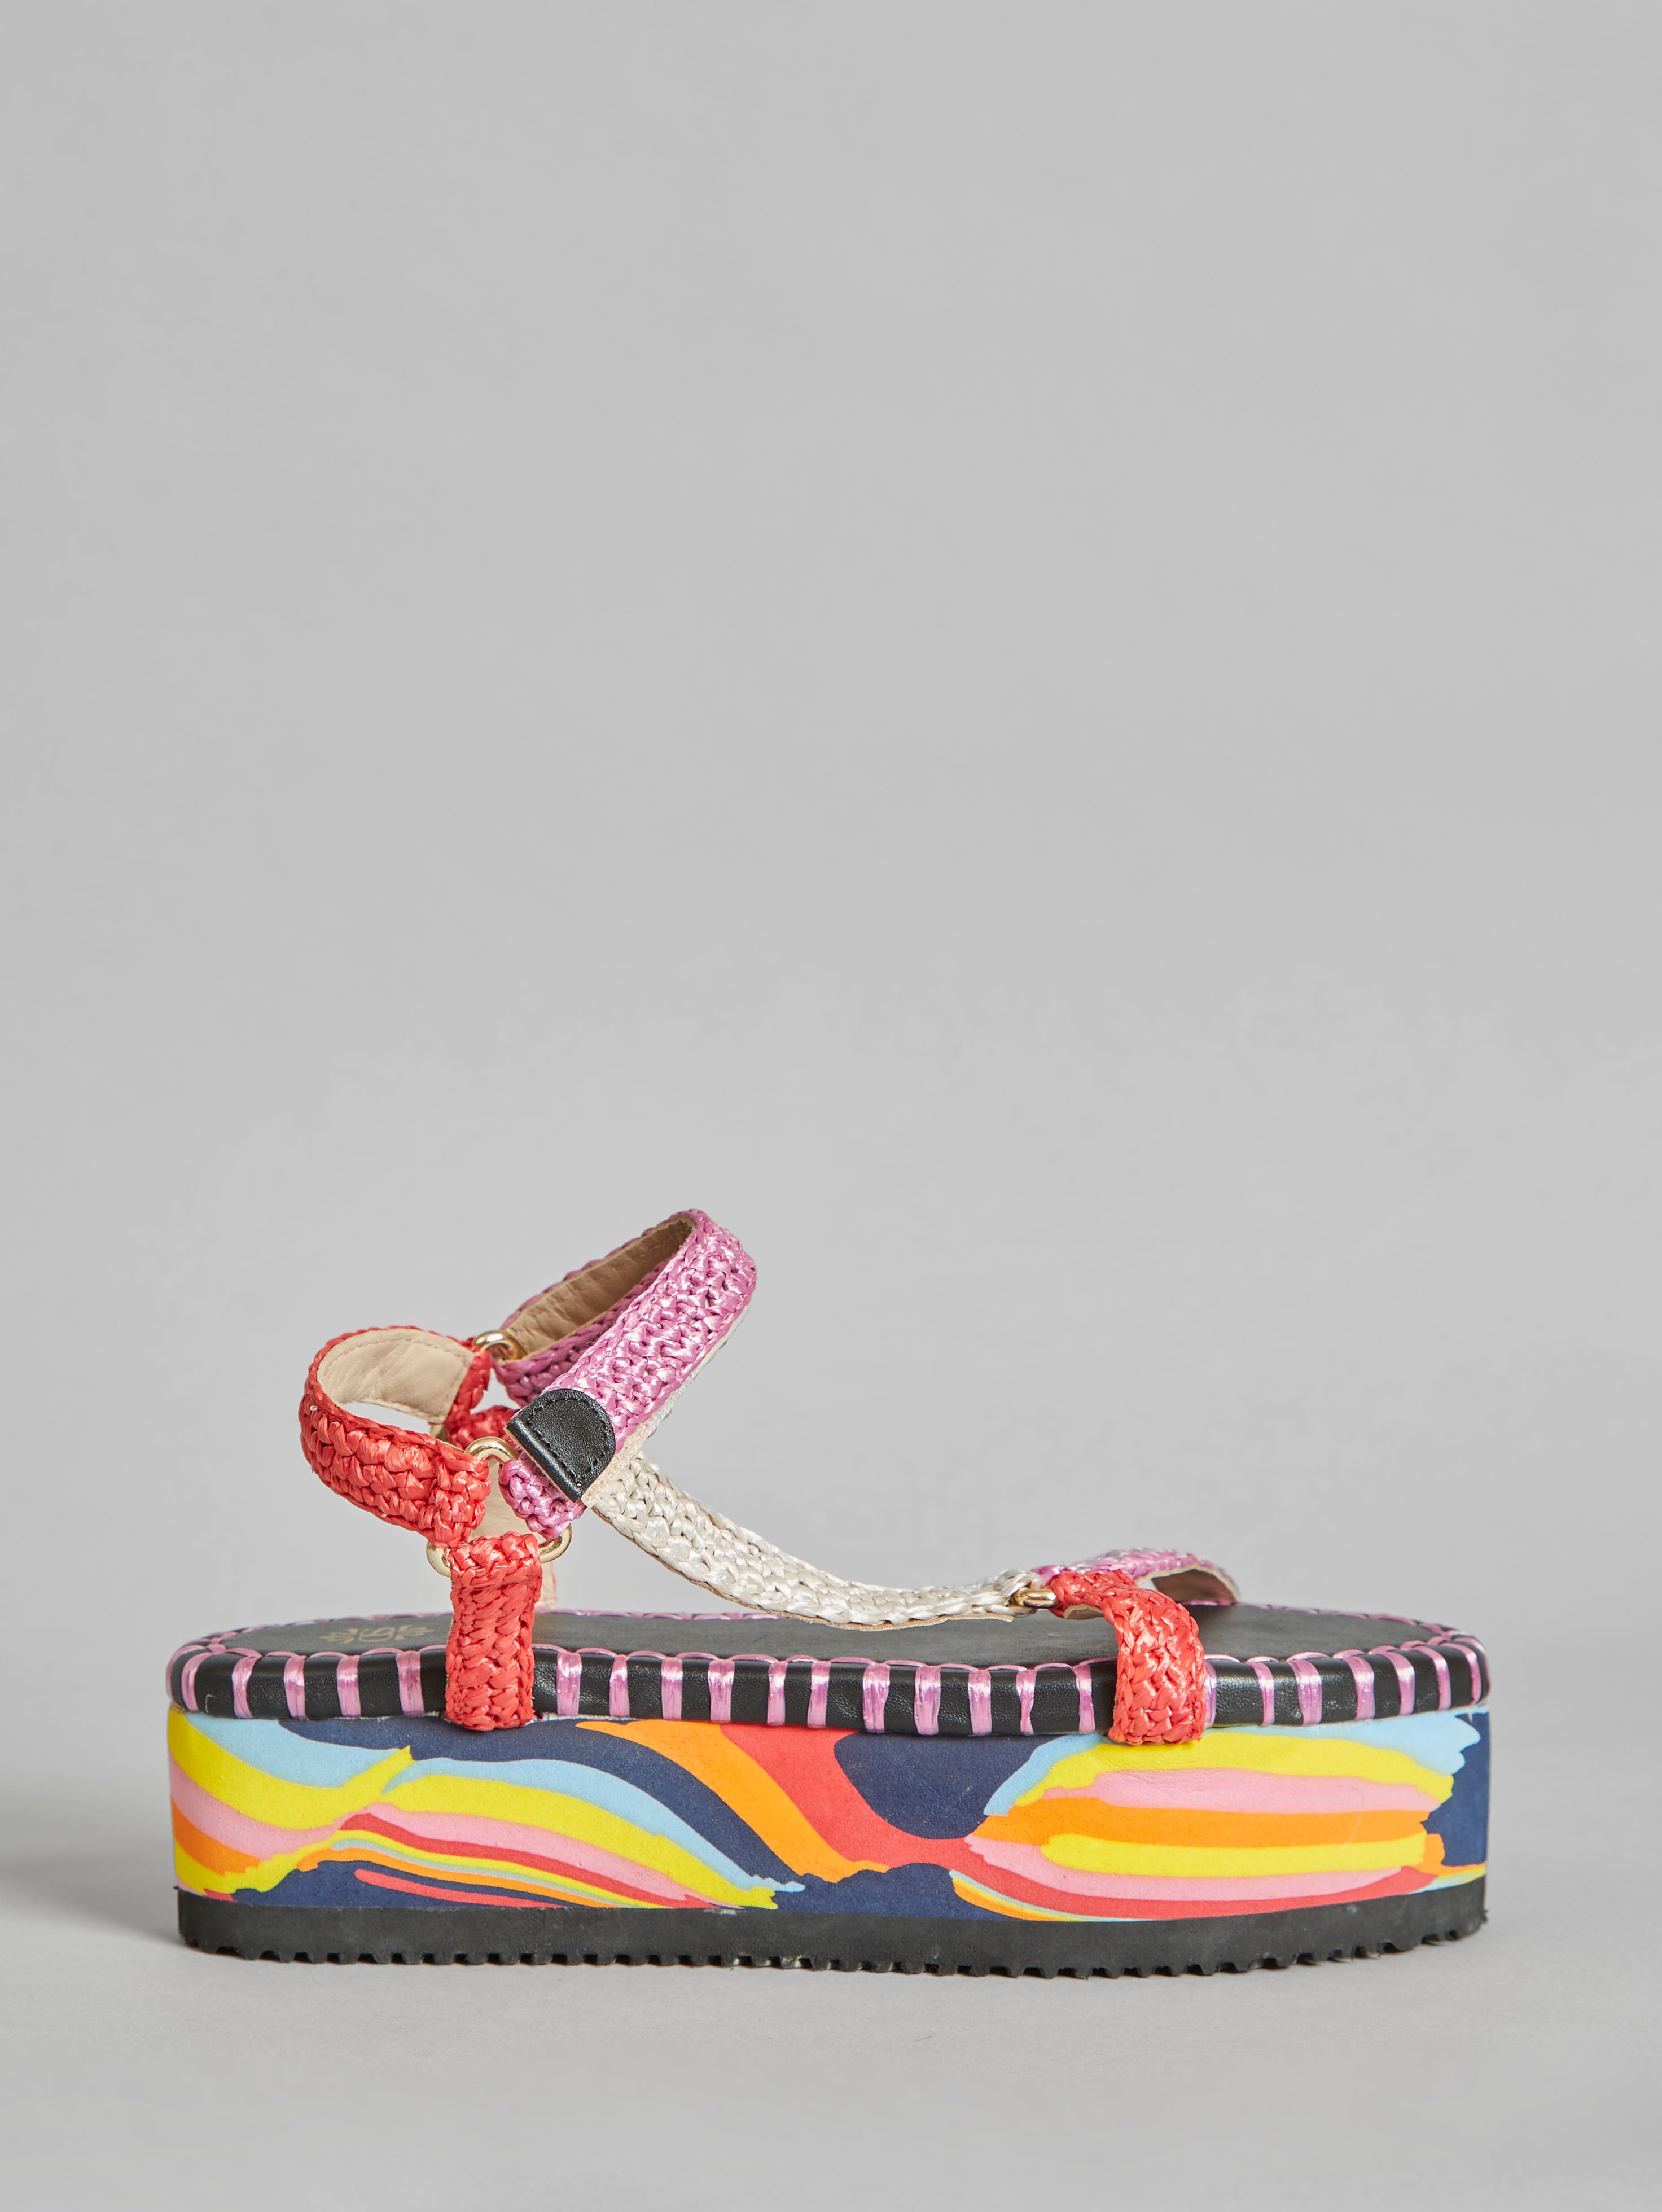 Hetre Alresford Hampshire SHOE Store De Siena Violet Multicoloured Kenya Sandal